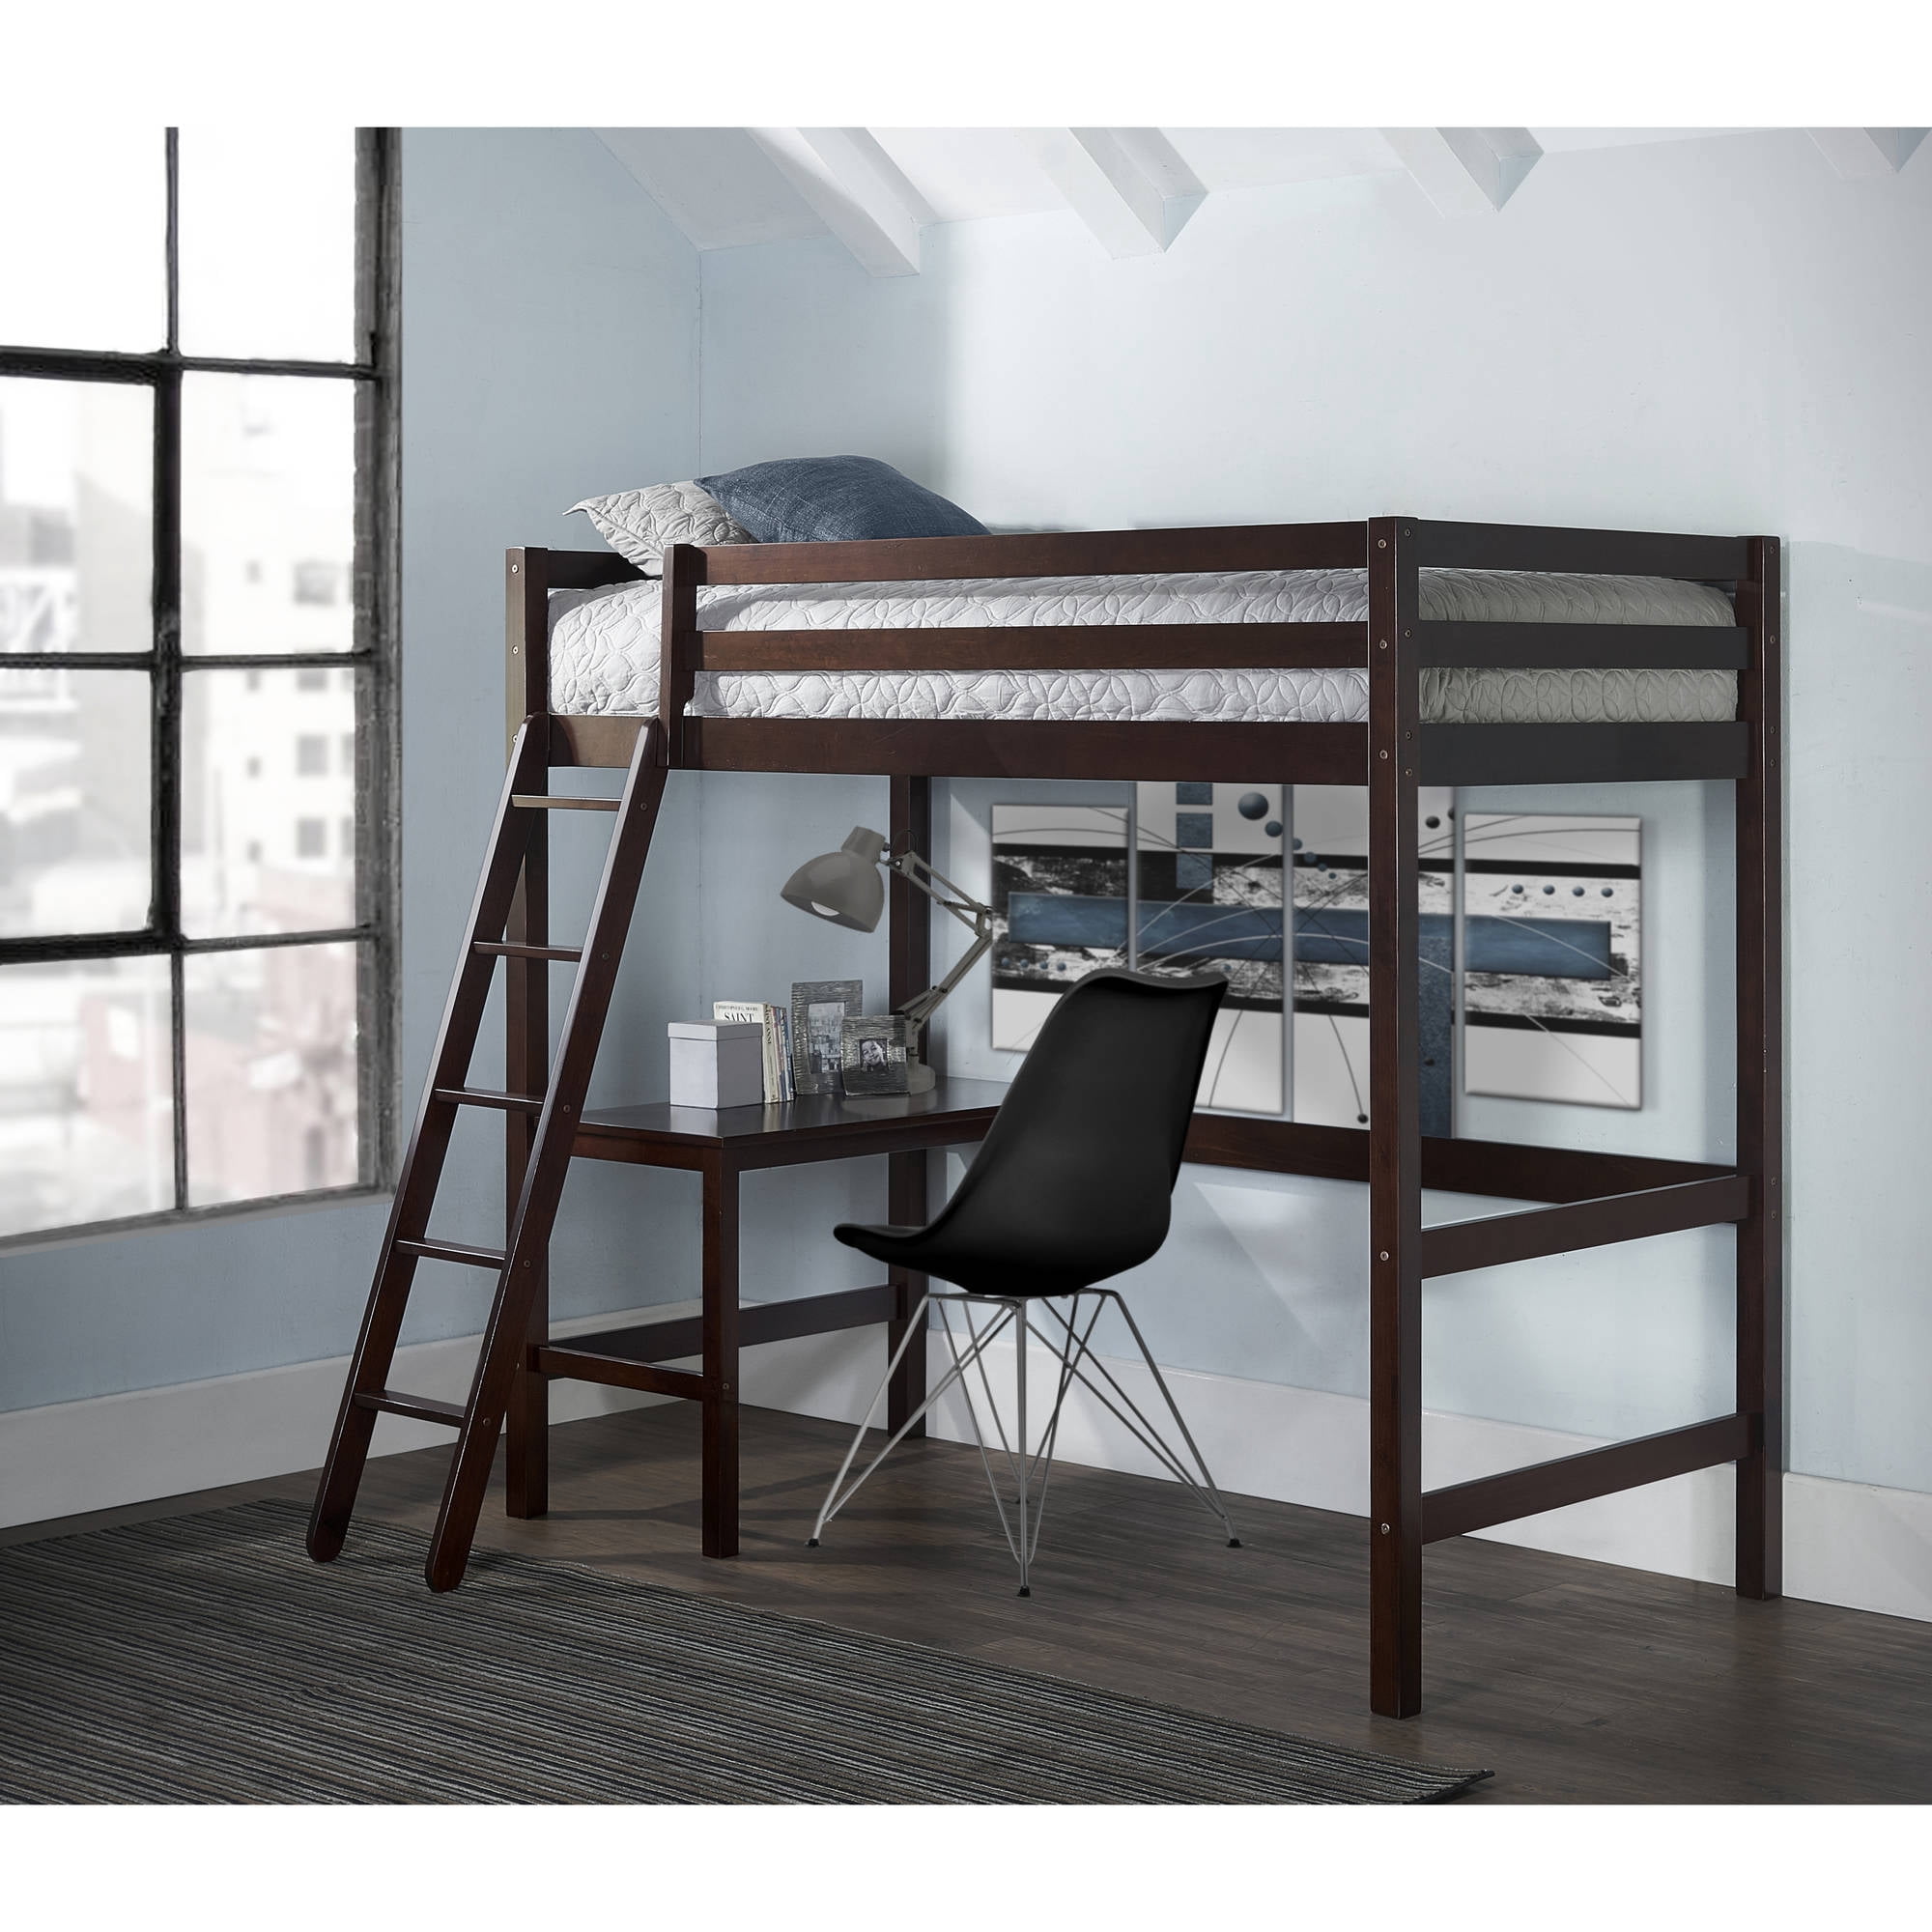 Hillsdale Caspian Study Twin Loft Bed With Desk Chocolate Walmart Com Walmart Com